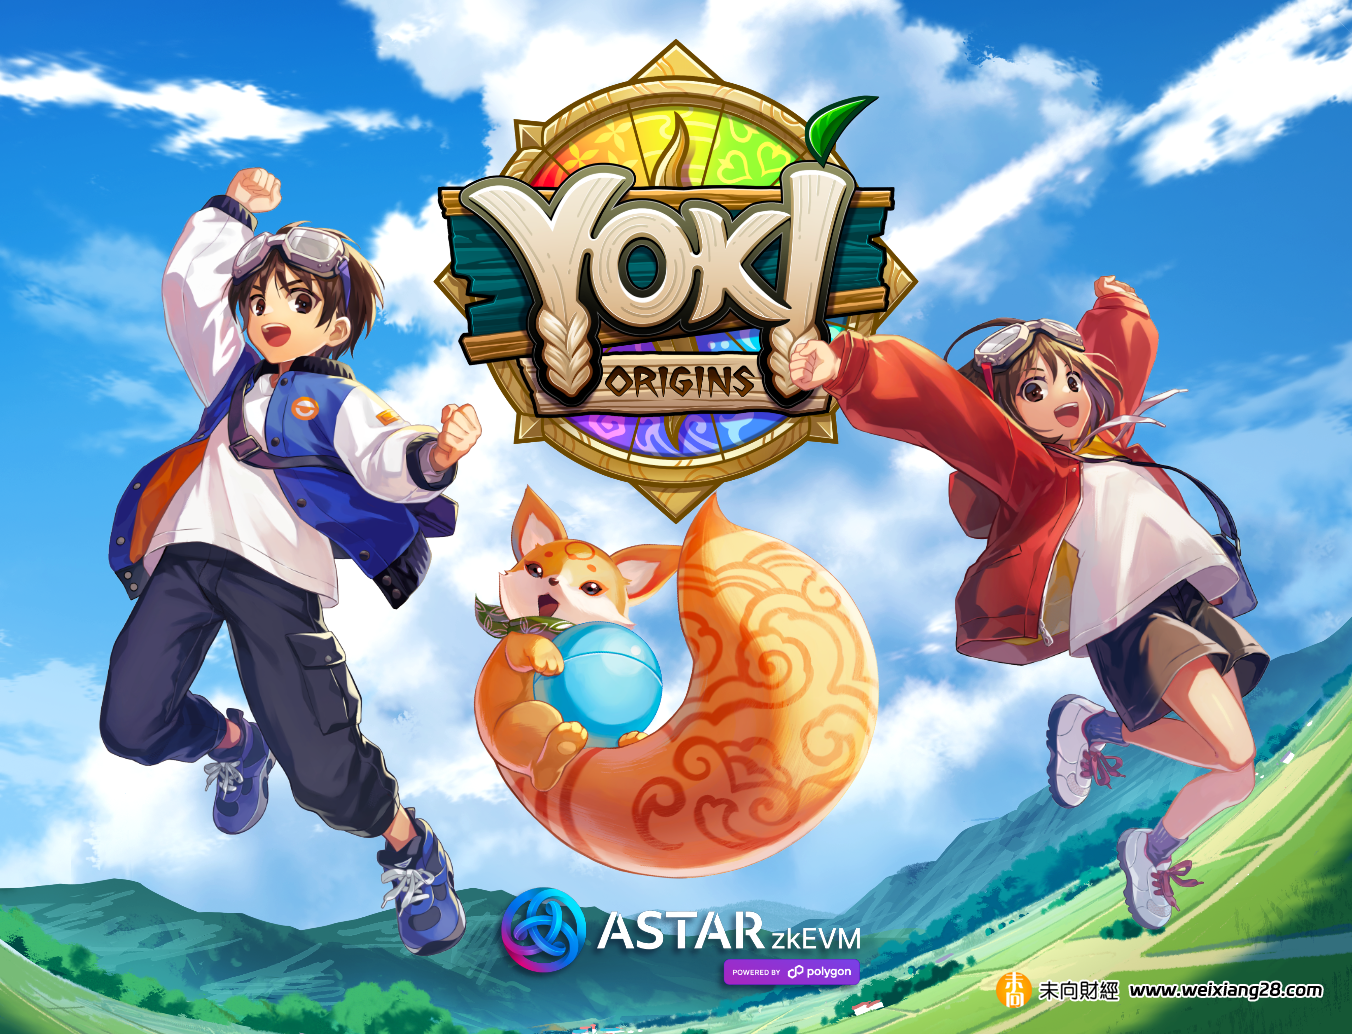 Astar Network 發佈“Yoki Origins”鏈上激勵系統：日本傳統巨頭和 Web3 創新先鋒的融合插图